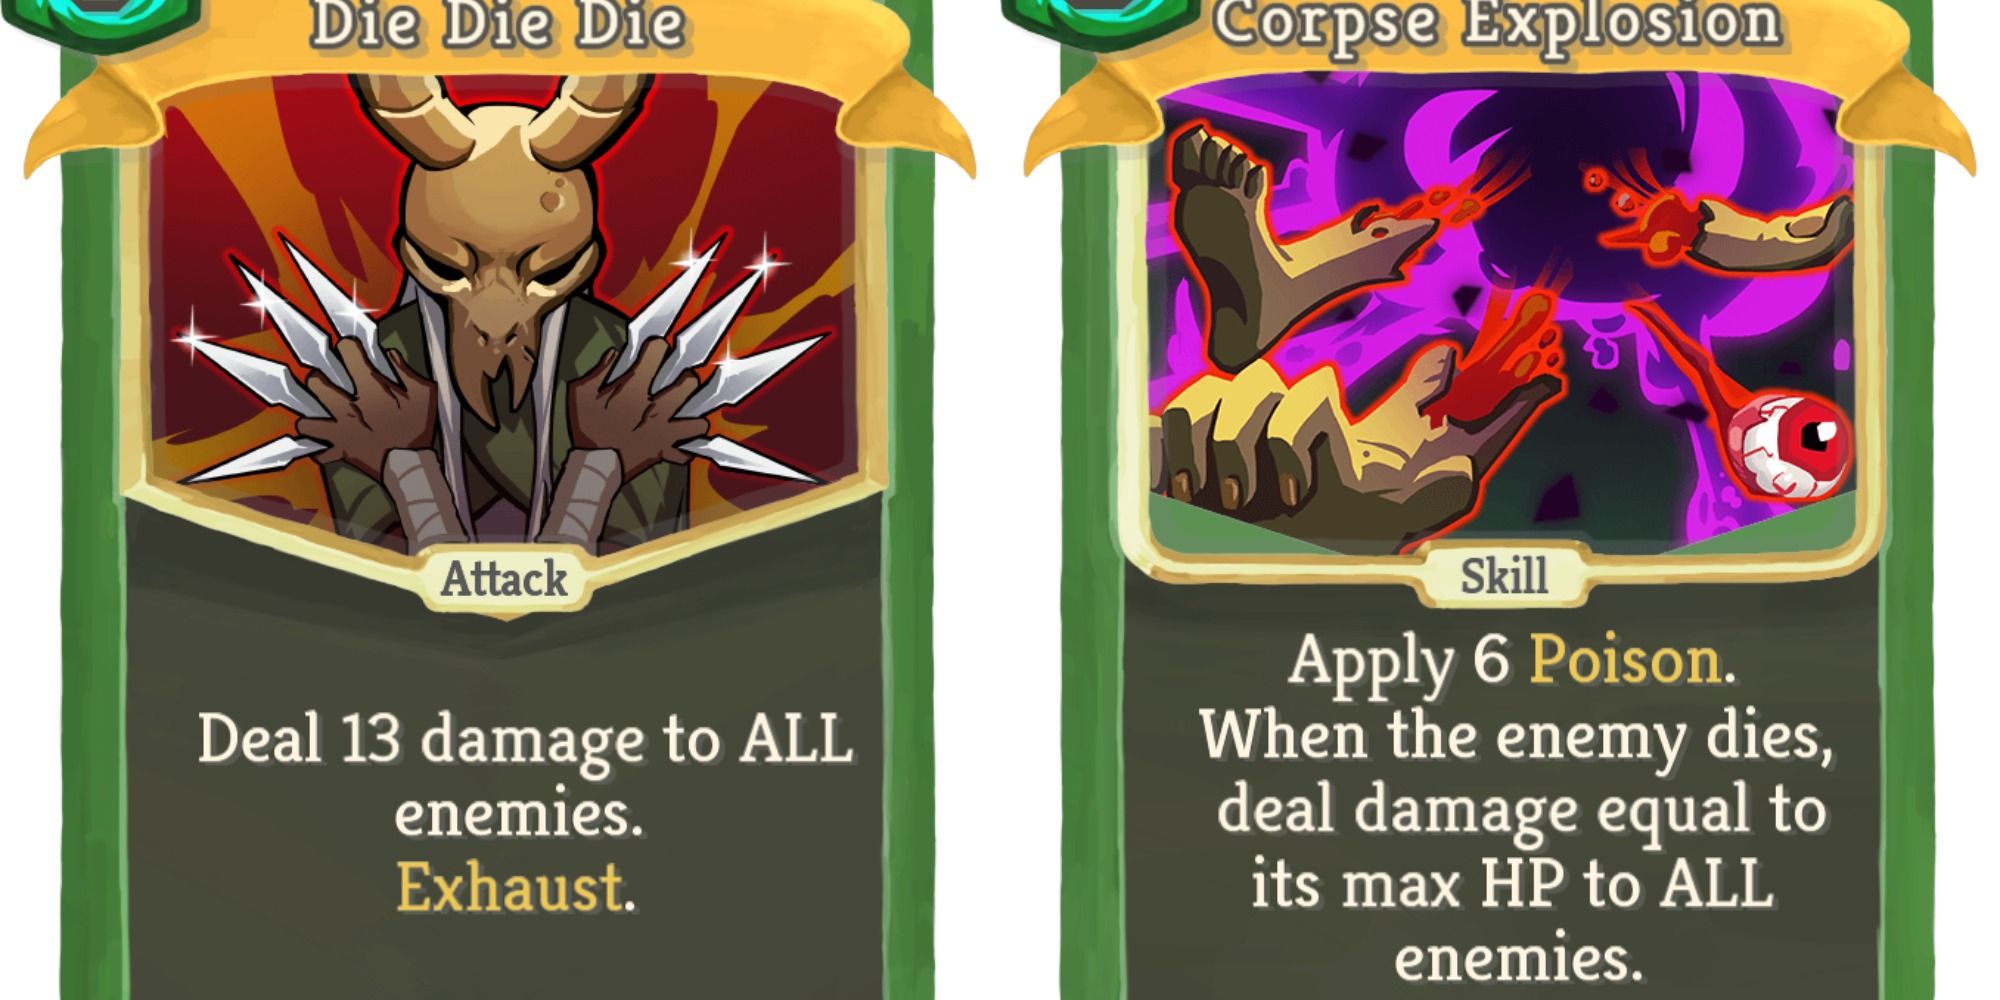 Split image showing the Corpse Explosion and Die Die Die cards in Slay the Spire